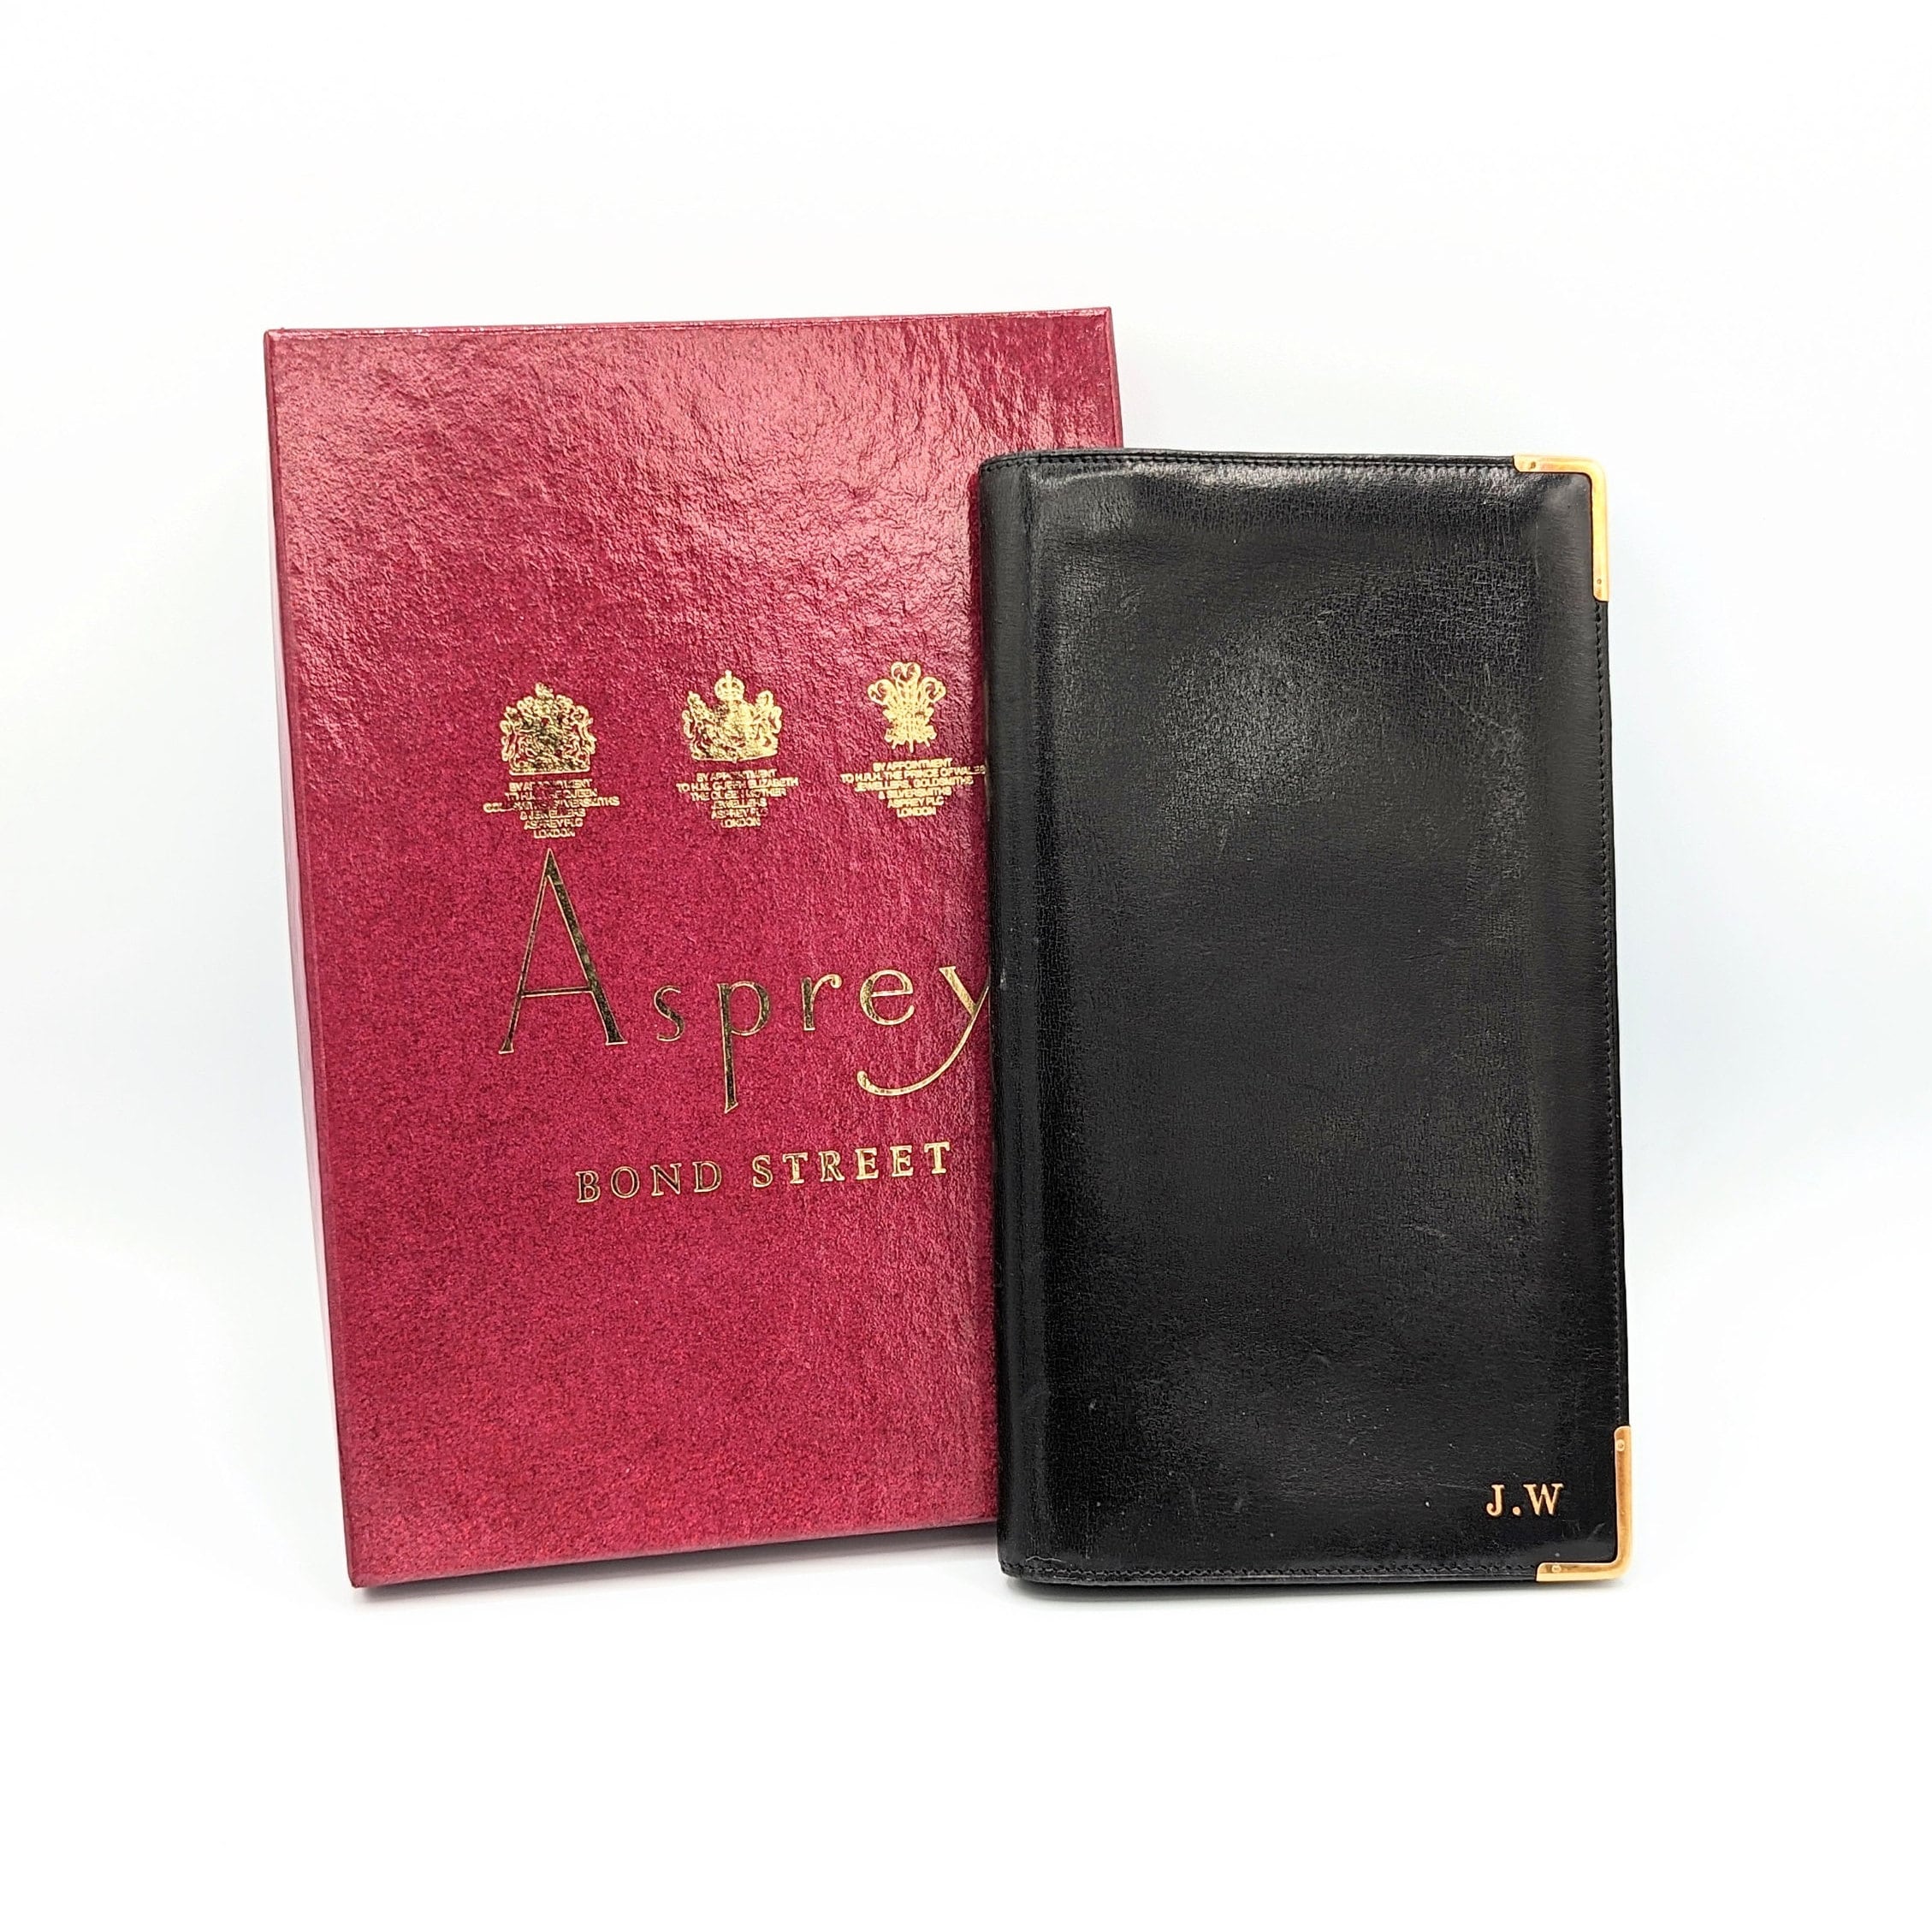 Rare PRADA SAFFIANO Black Nero Leather Wallet Passport-style